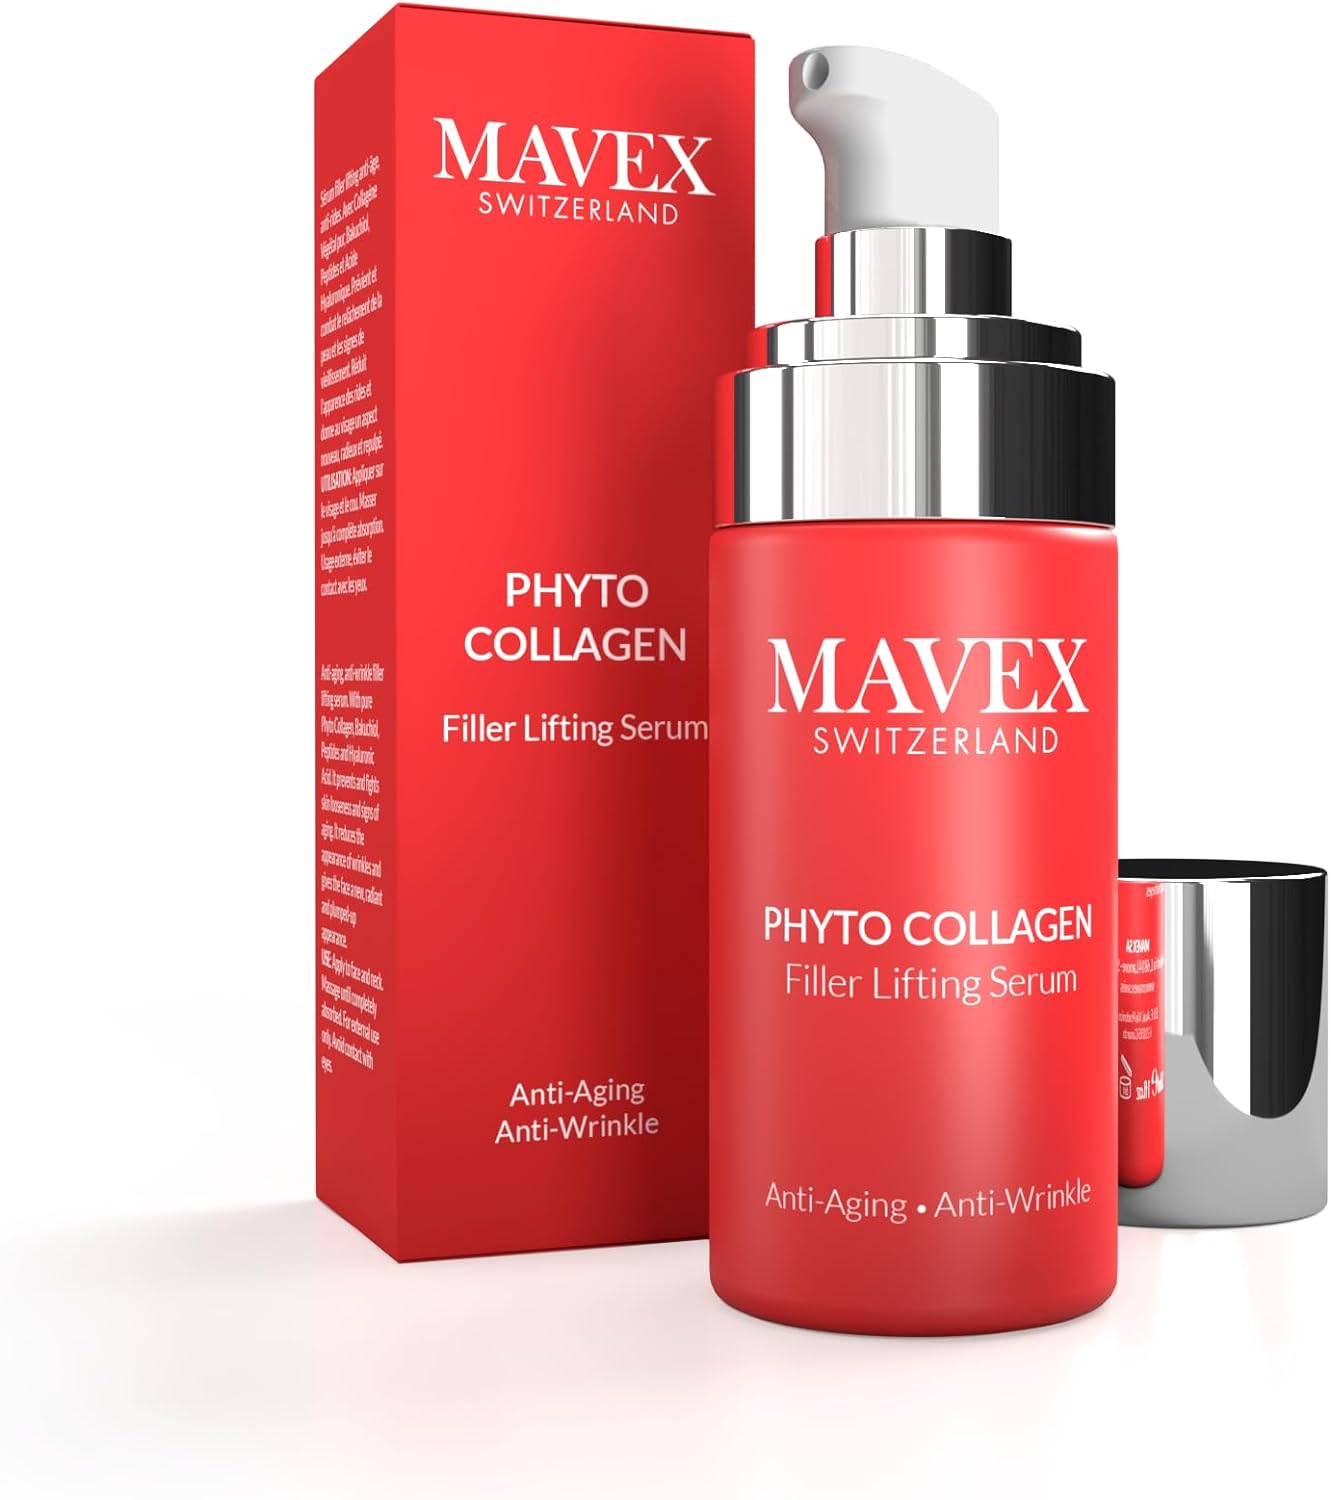 MAVEX PHITO COLLAGEN Filler Lifting Serum 30ml Anti-aging